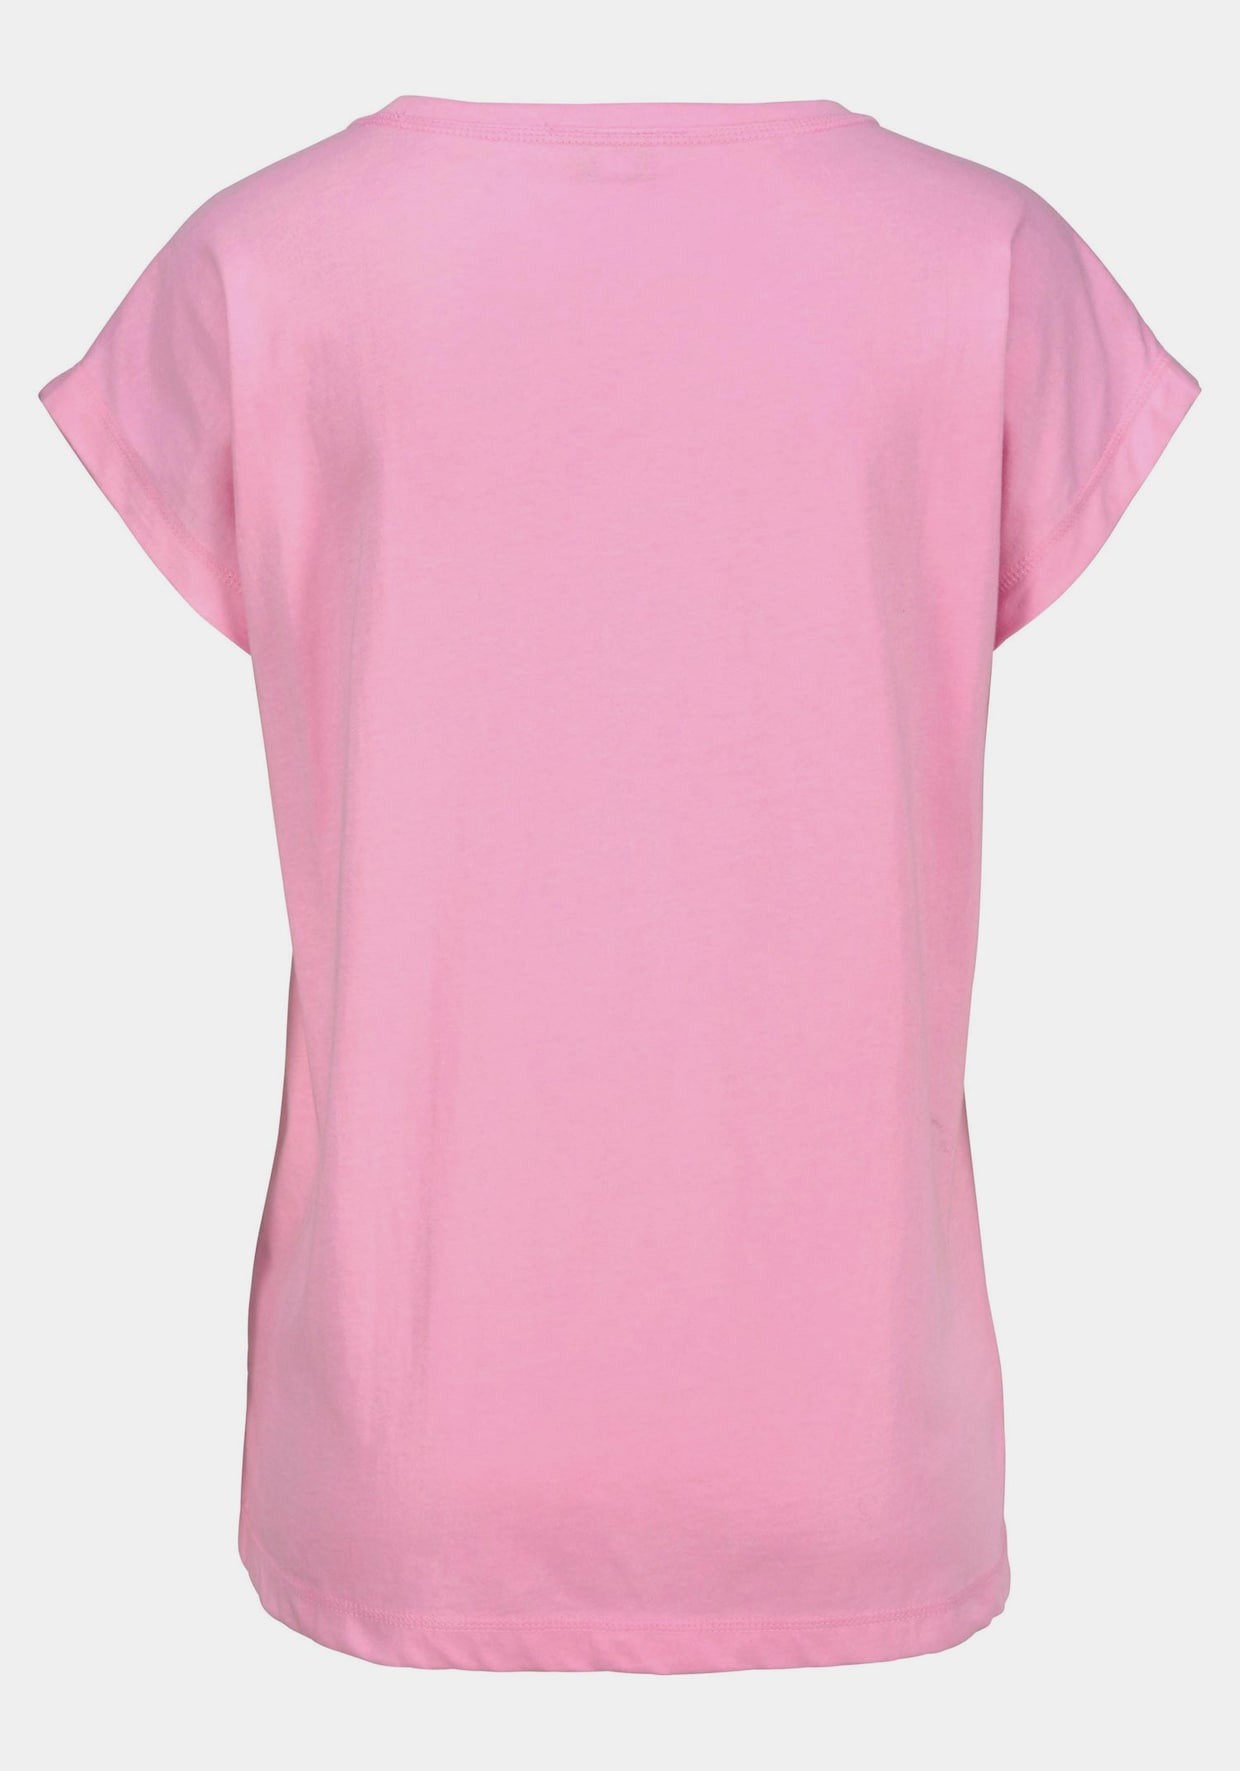 Vivance Dreams T-Shirt - pink